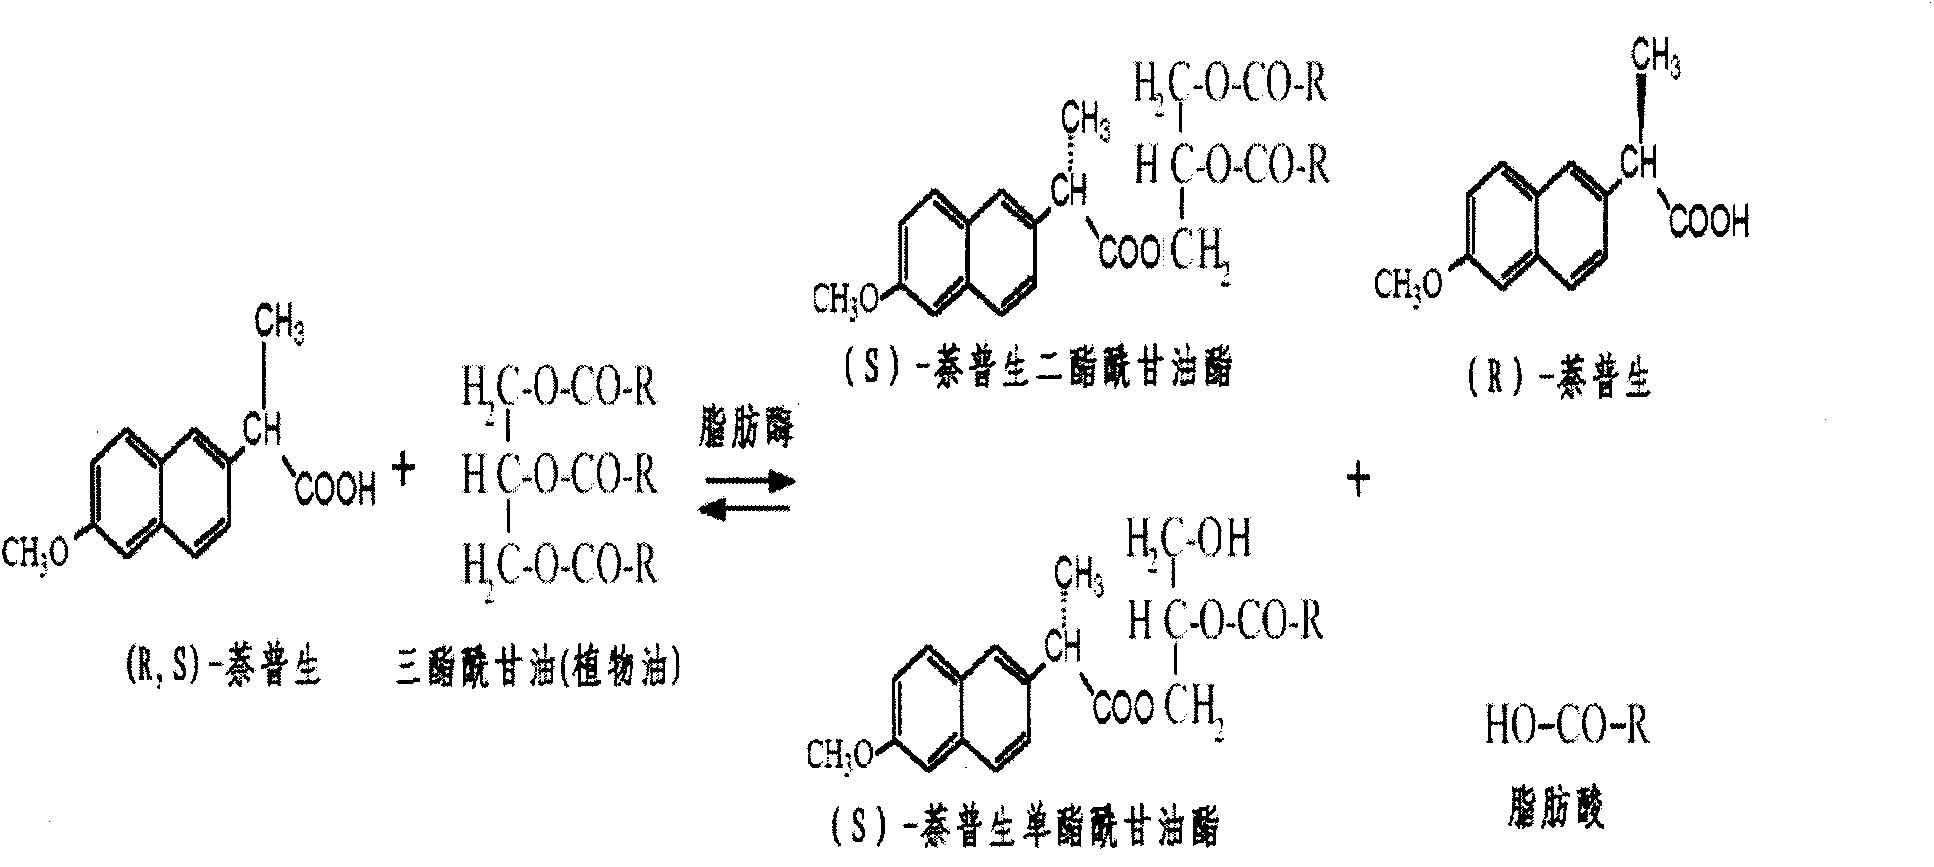 Preparation method of S-(+)-naproxen fatty acyl glyceride prodrug